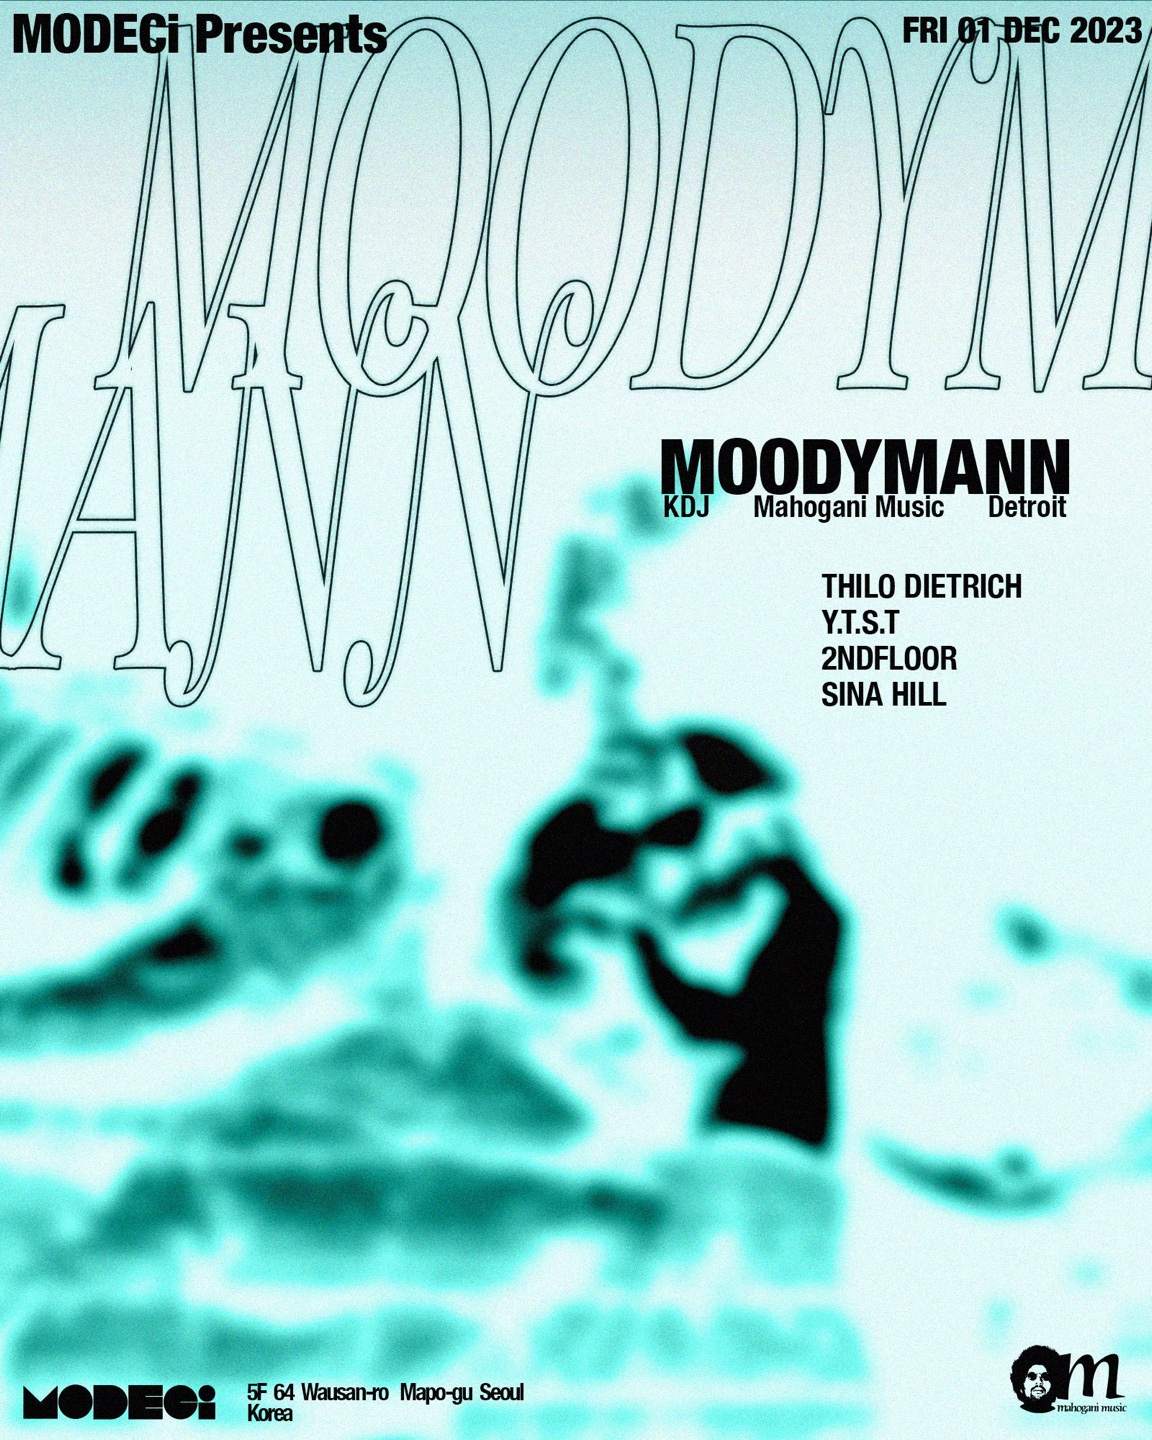 Moodymann (KDJ, Mahogani Music / Detroit) - フライヤー裏